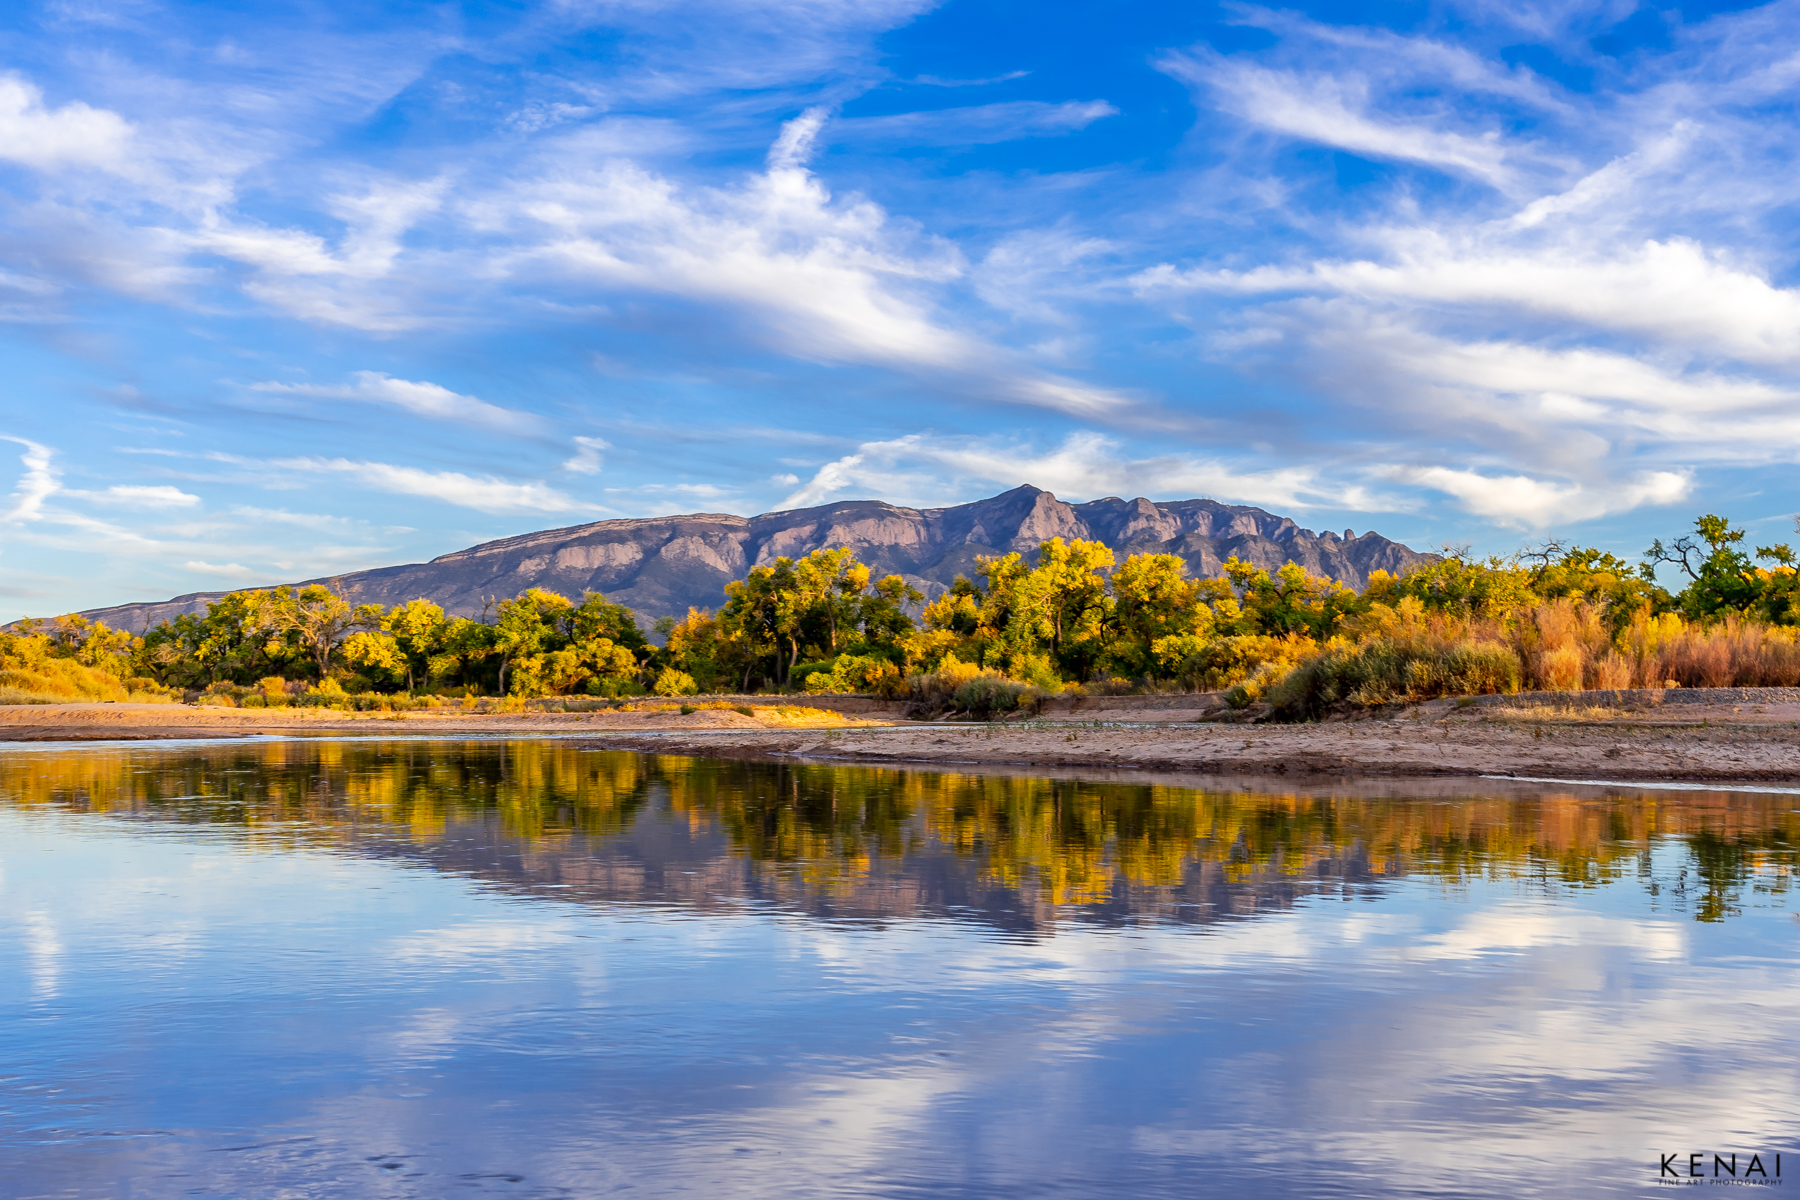 A brilliant, sun-filled day over the Rio Grande Bosque and Sandia Mountains of New Mexico.